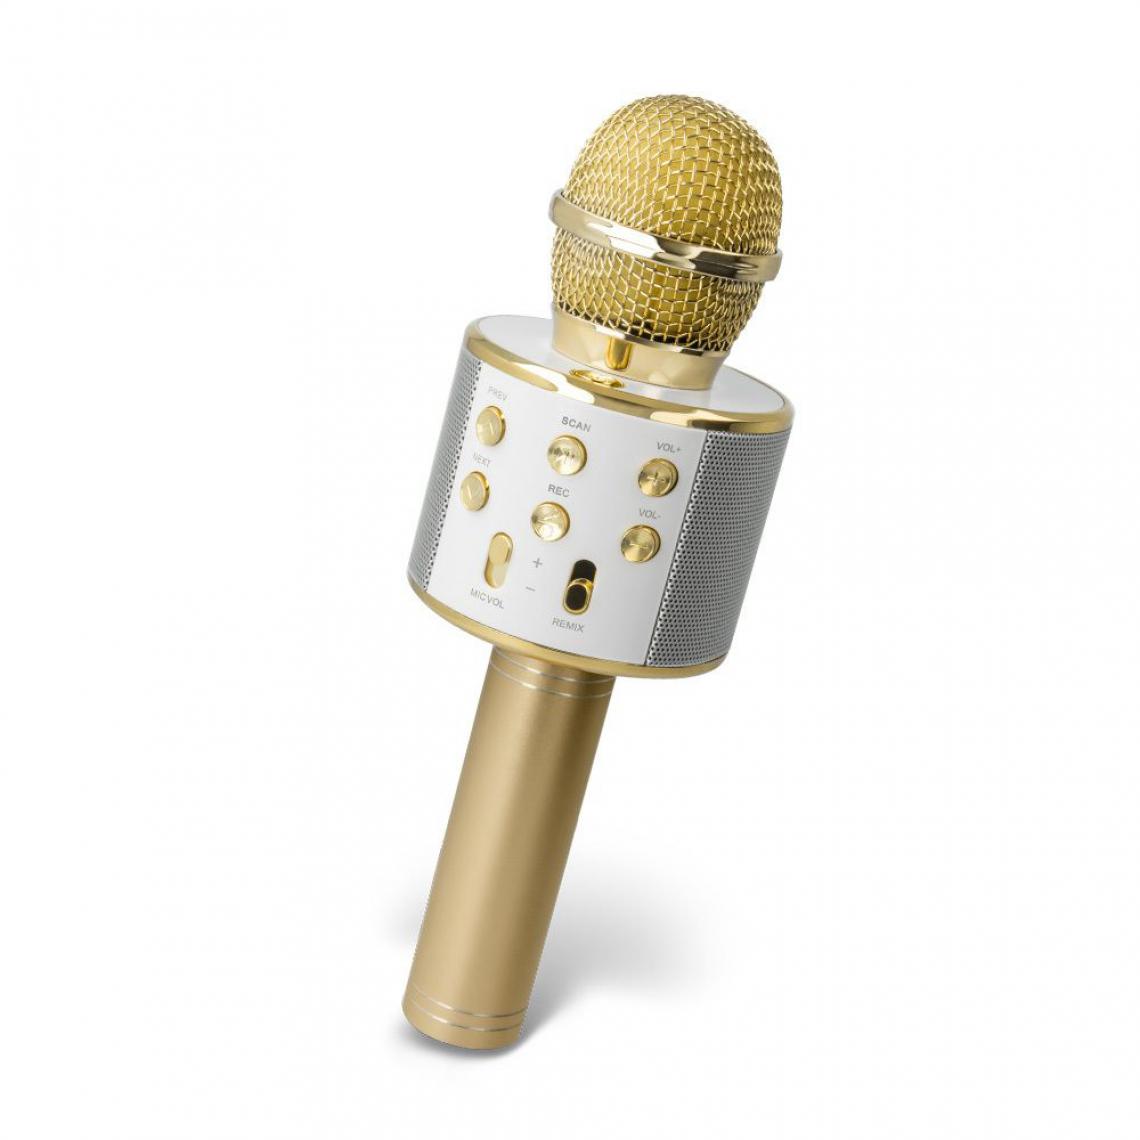 Ozzzo - Microphone Karaoke bluetooth haut parleur ozzzo Gold Or pour Gionee F10 - Autres accessoires smartphone